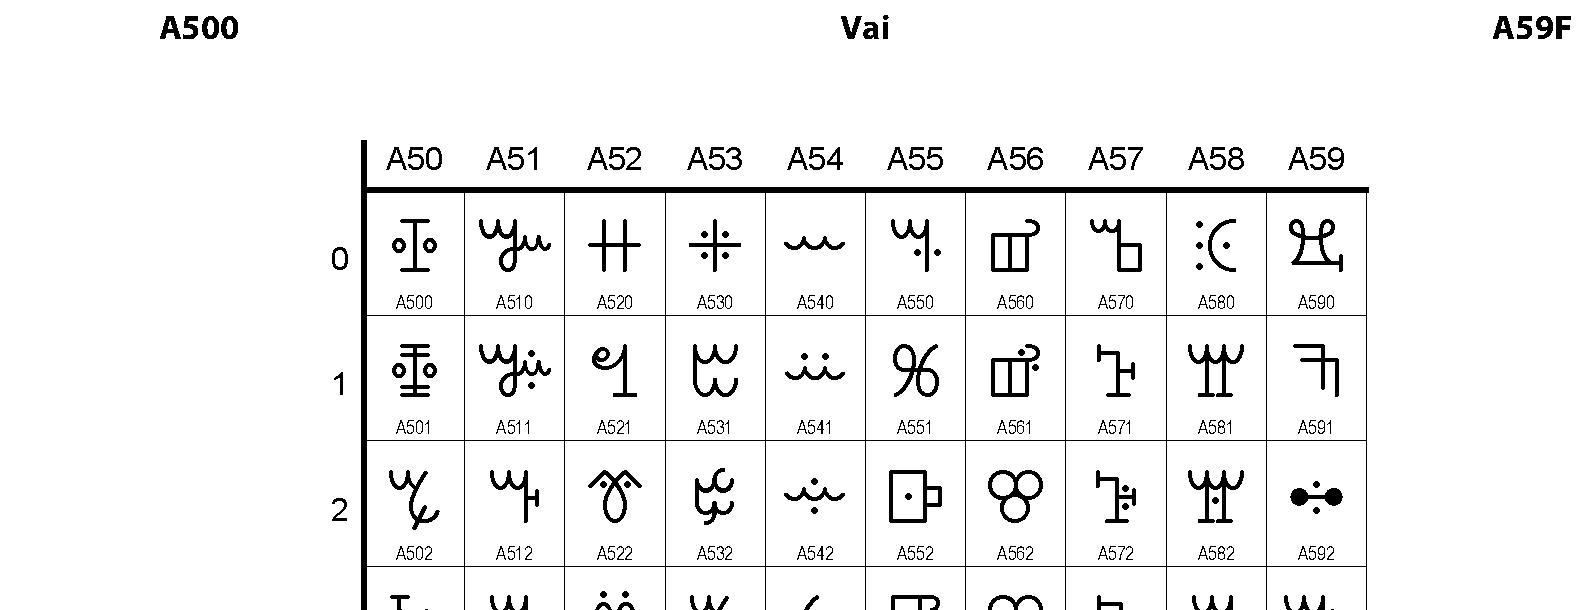 Unicode - Vai